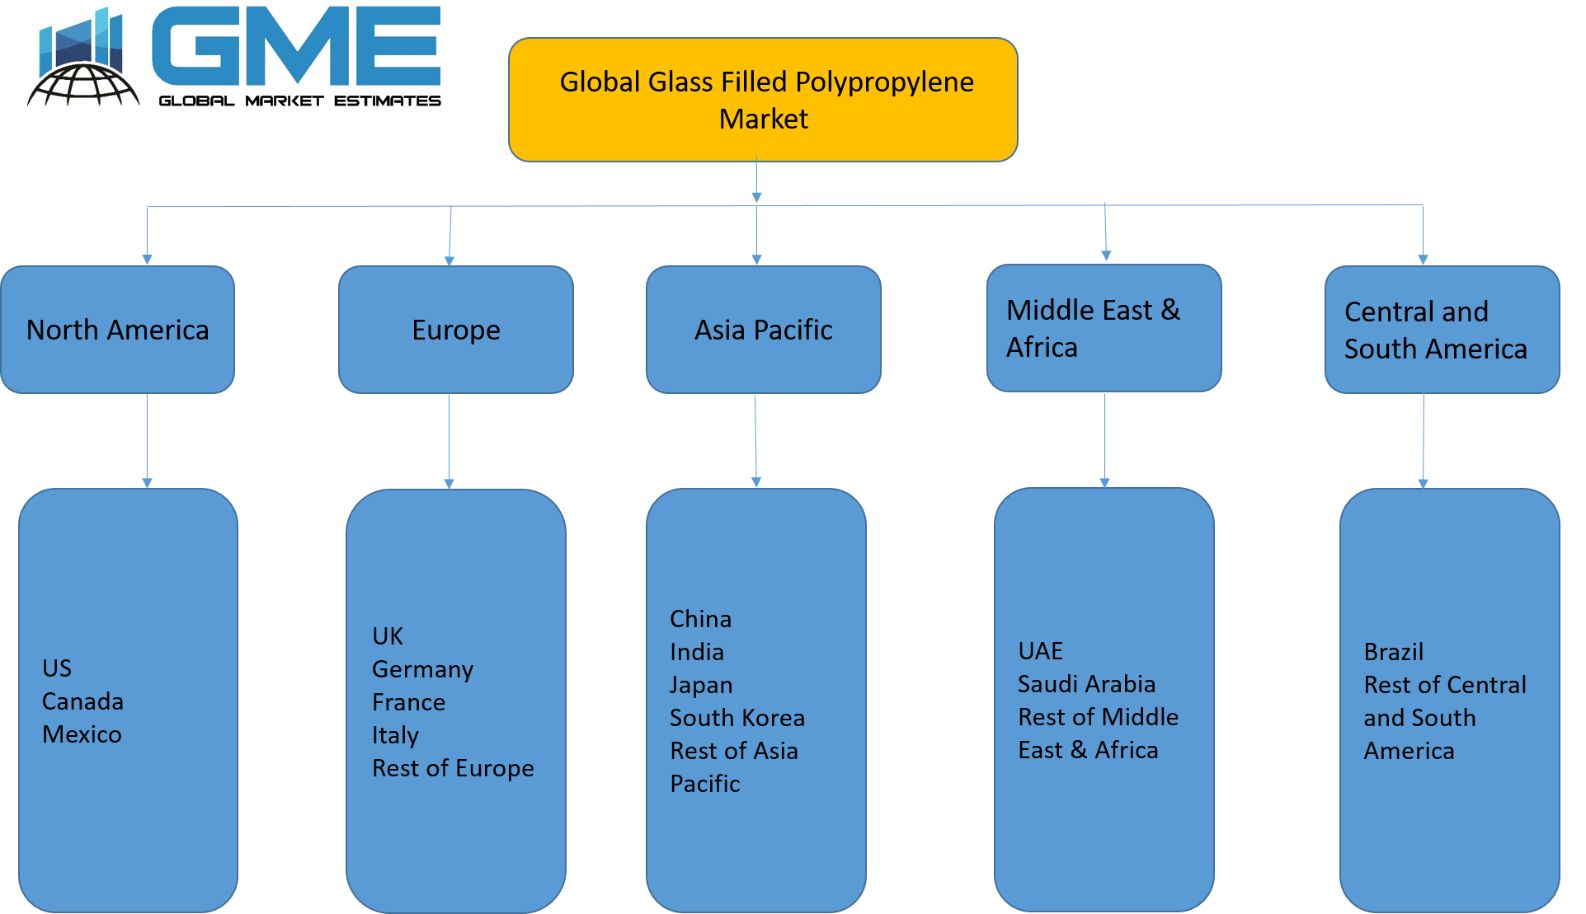 Glass Filled Polypropylene Market - Regional Analysis